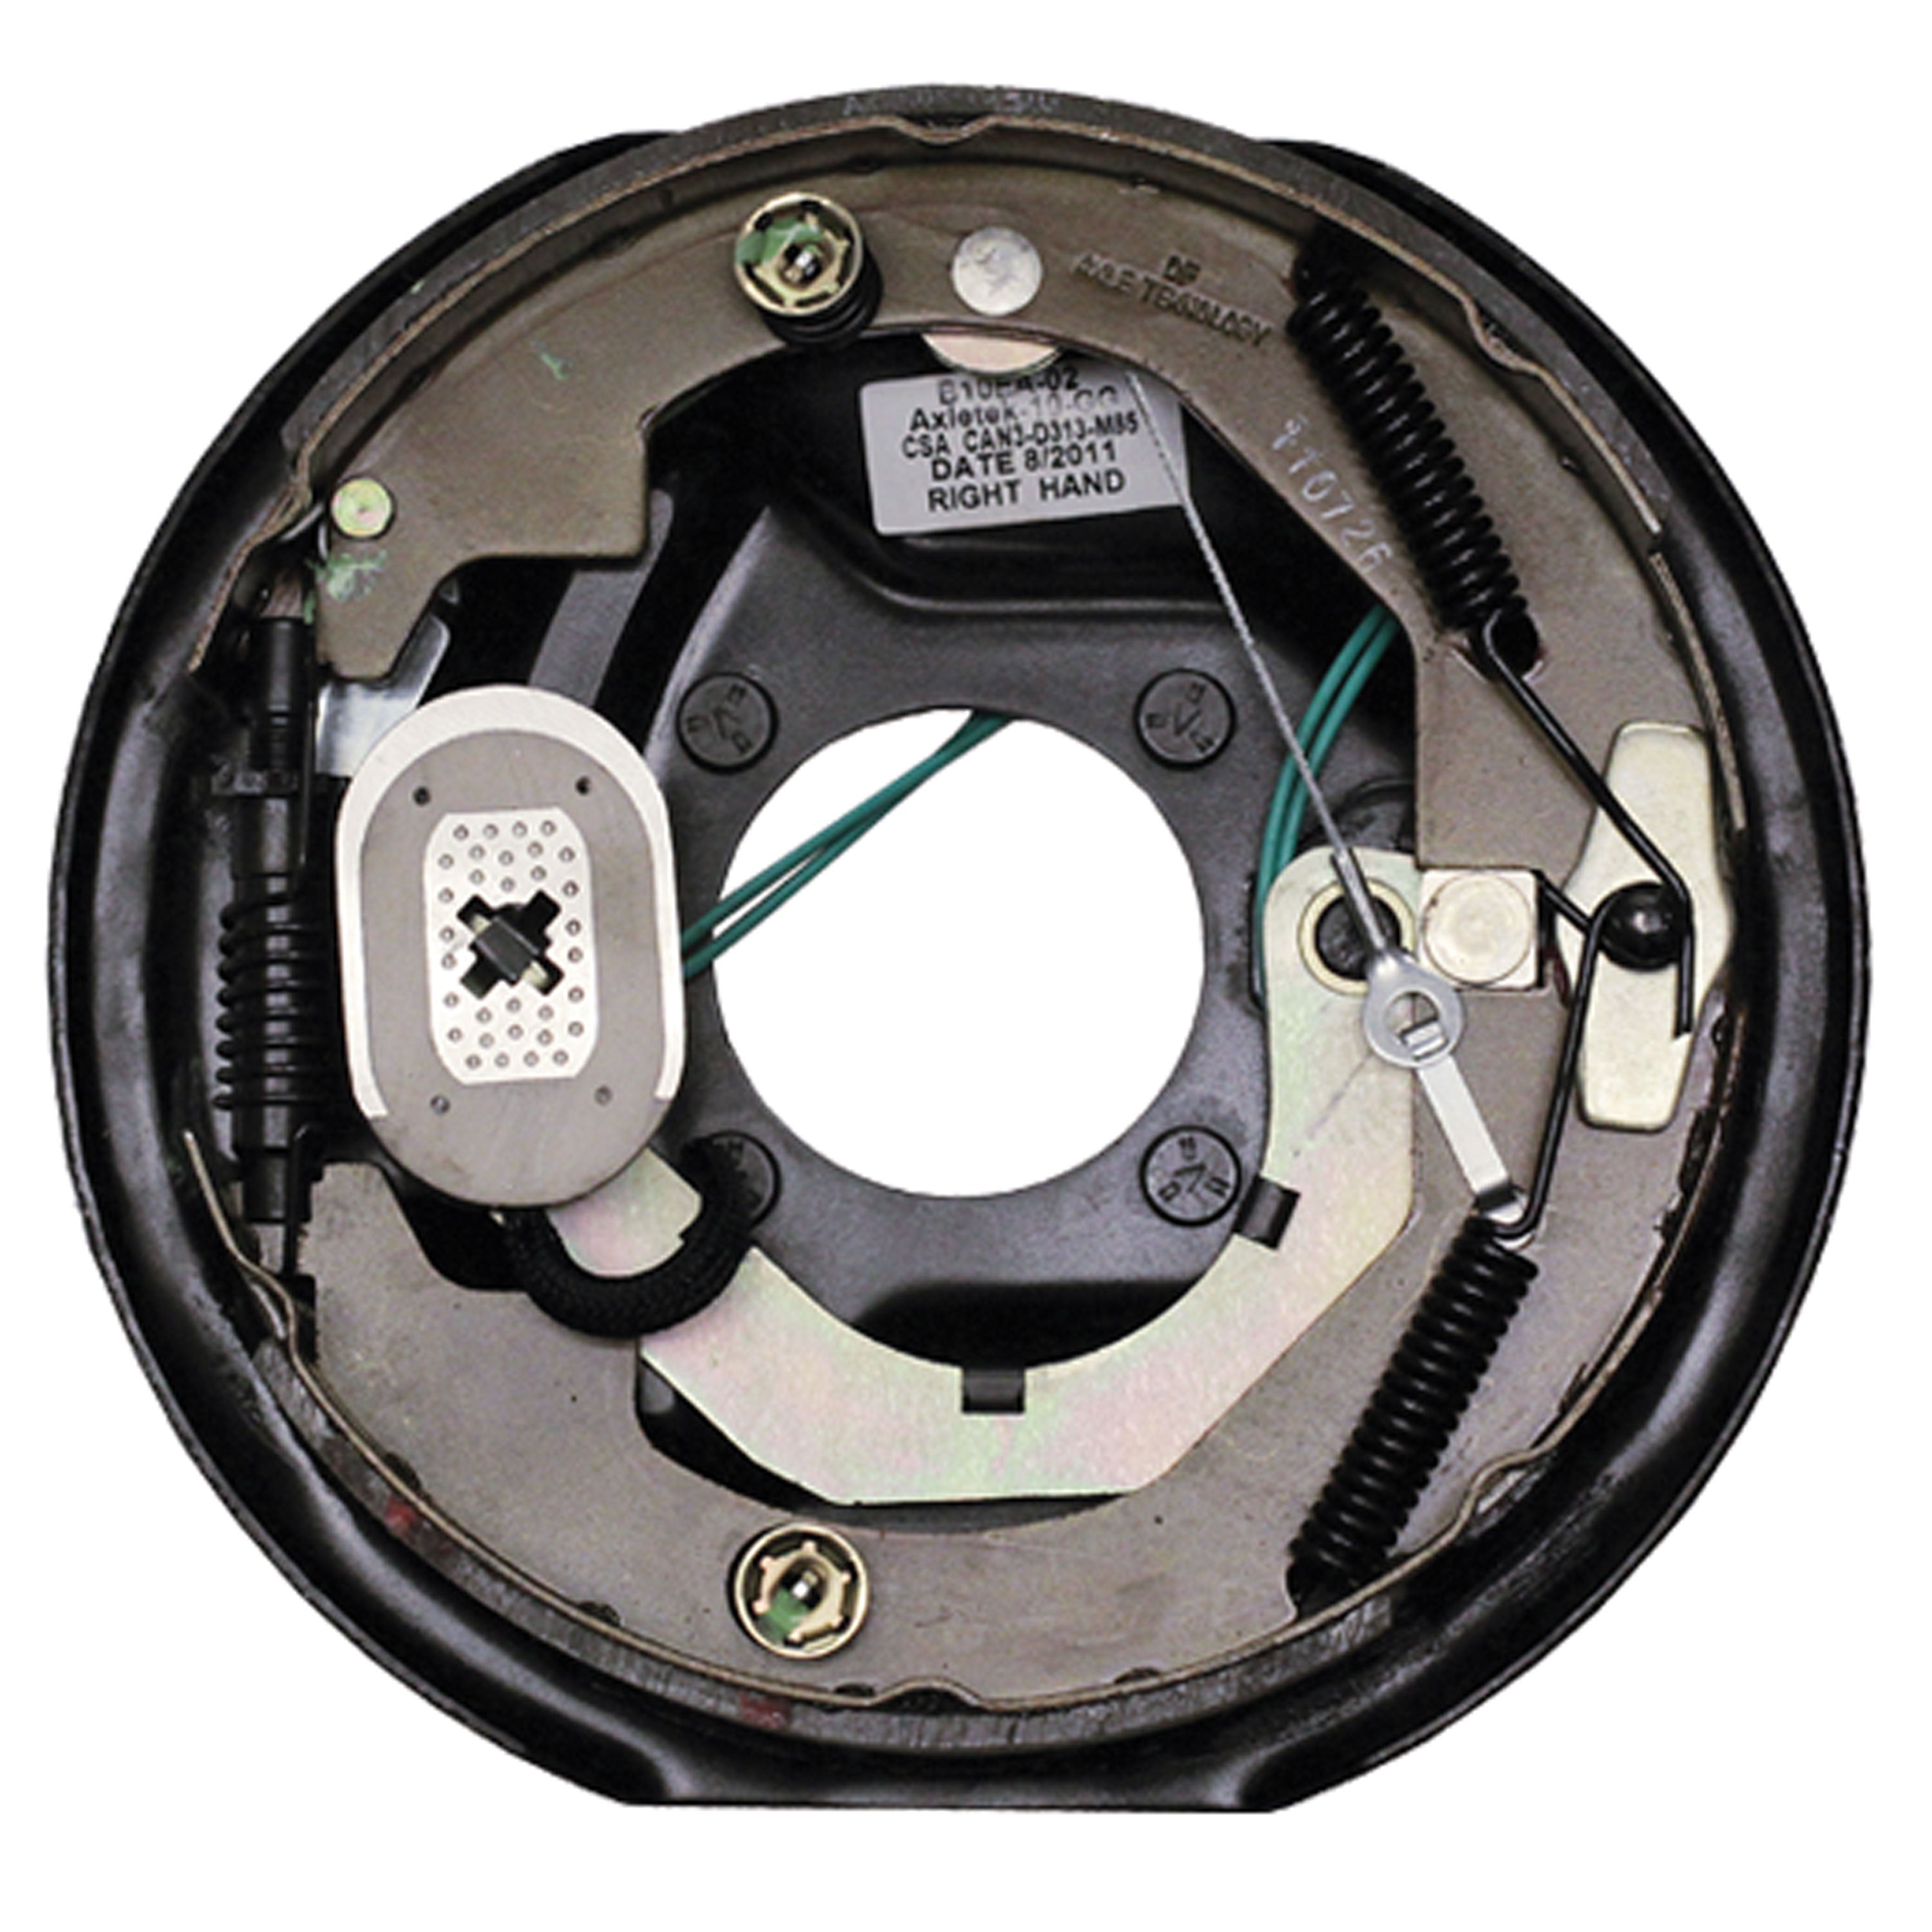 Lippert 296649 Forward Self-Adjusting Brake Assembly - 10" x 2.25", 3,500 lbs. (Left Side)